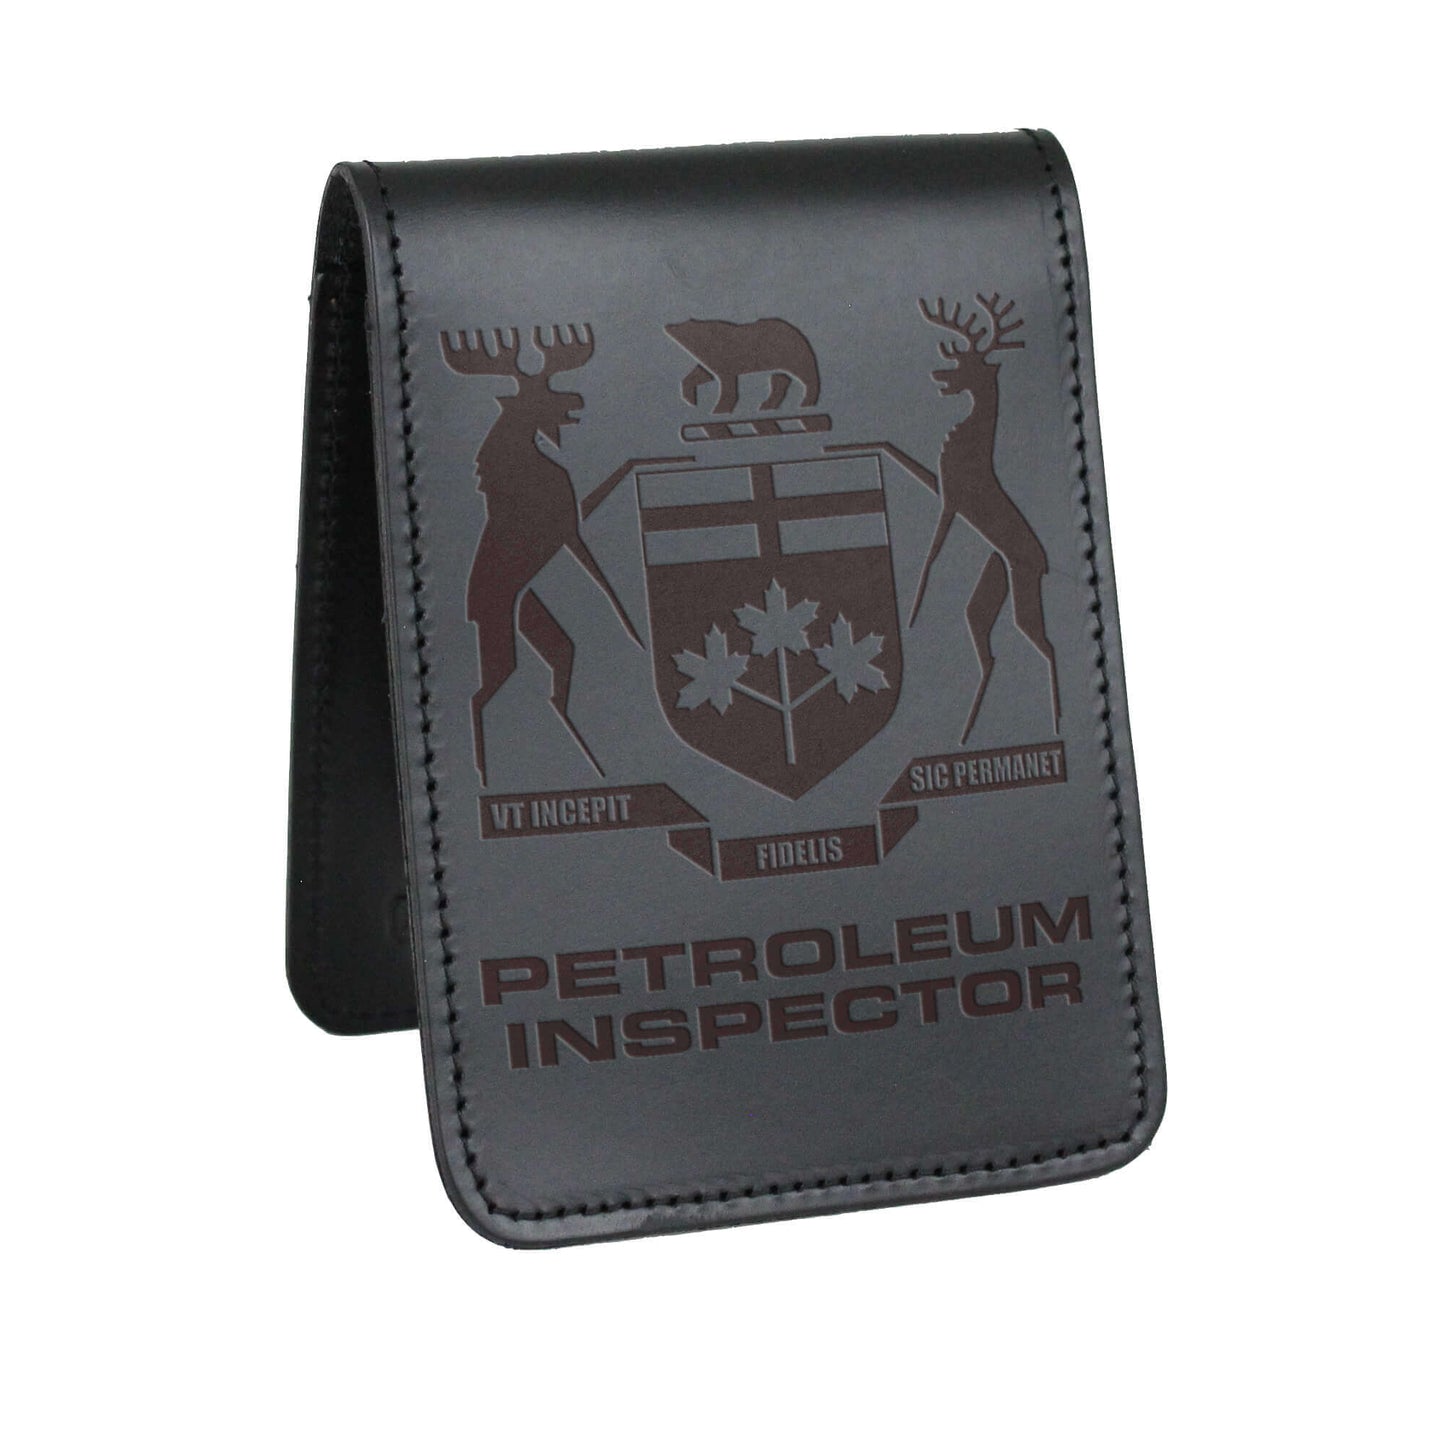 Ontario Petroleum Inspector Notebook Cover